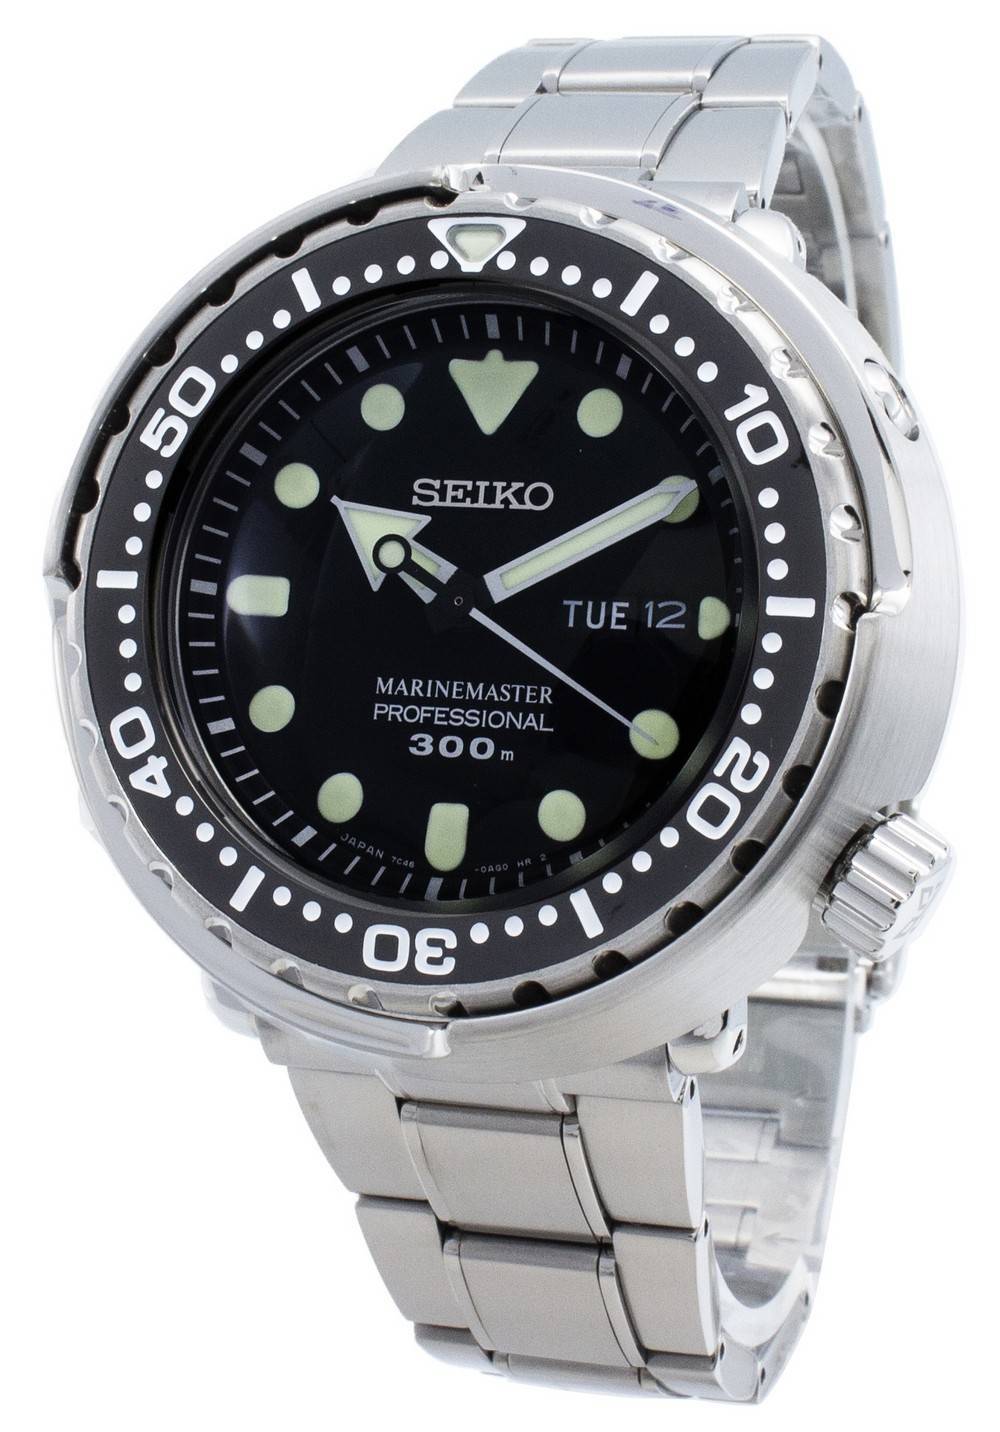 Đồng hồ đeo tay nam Seiko Prospex MarineMaster Professional 300M SBBN031 vi